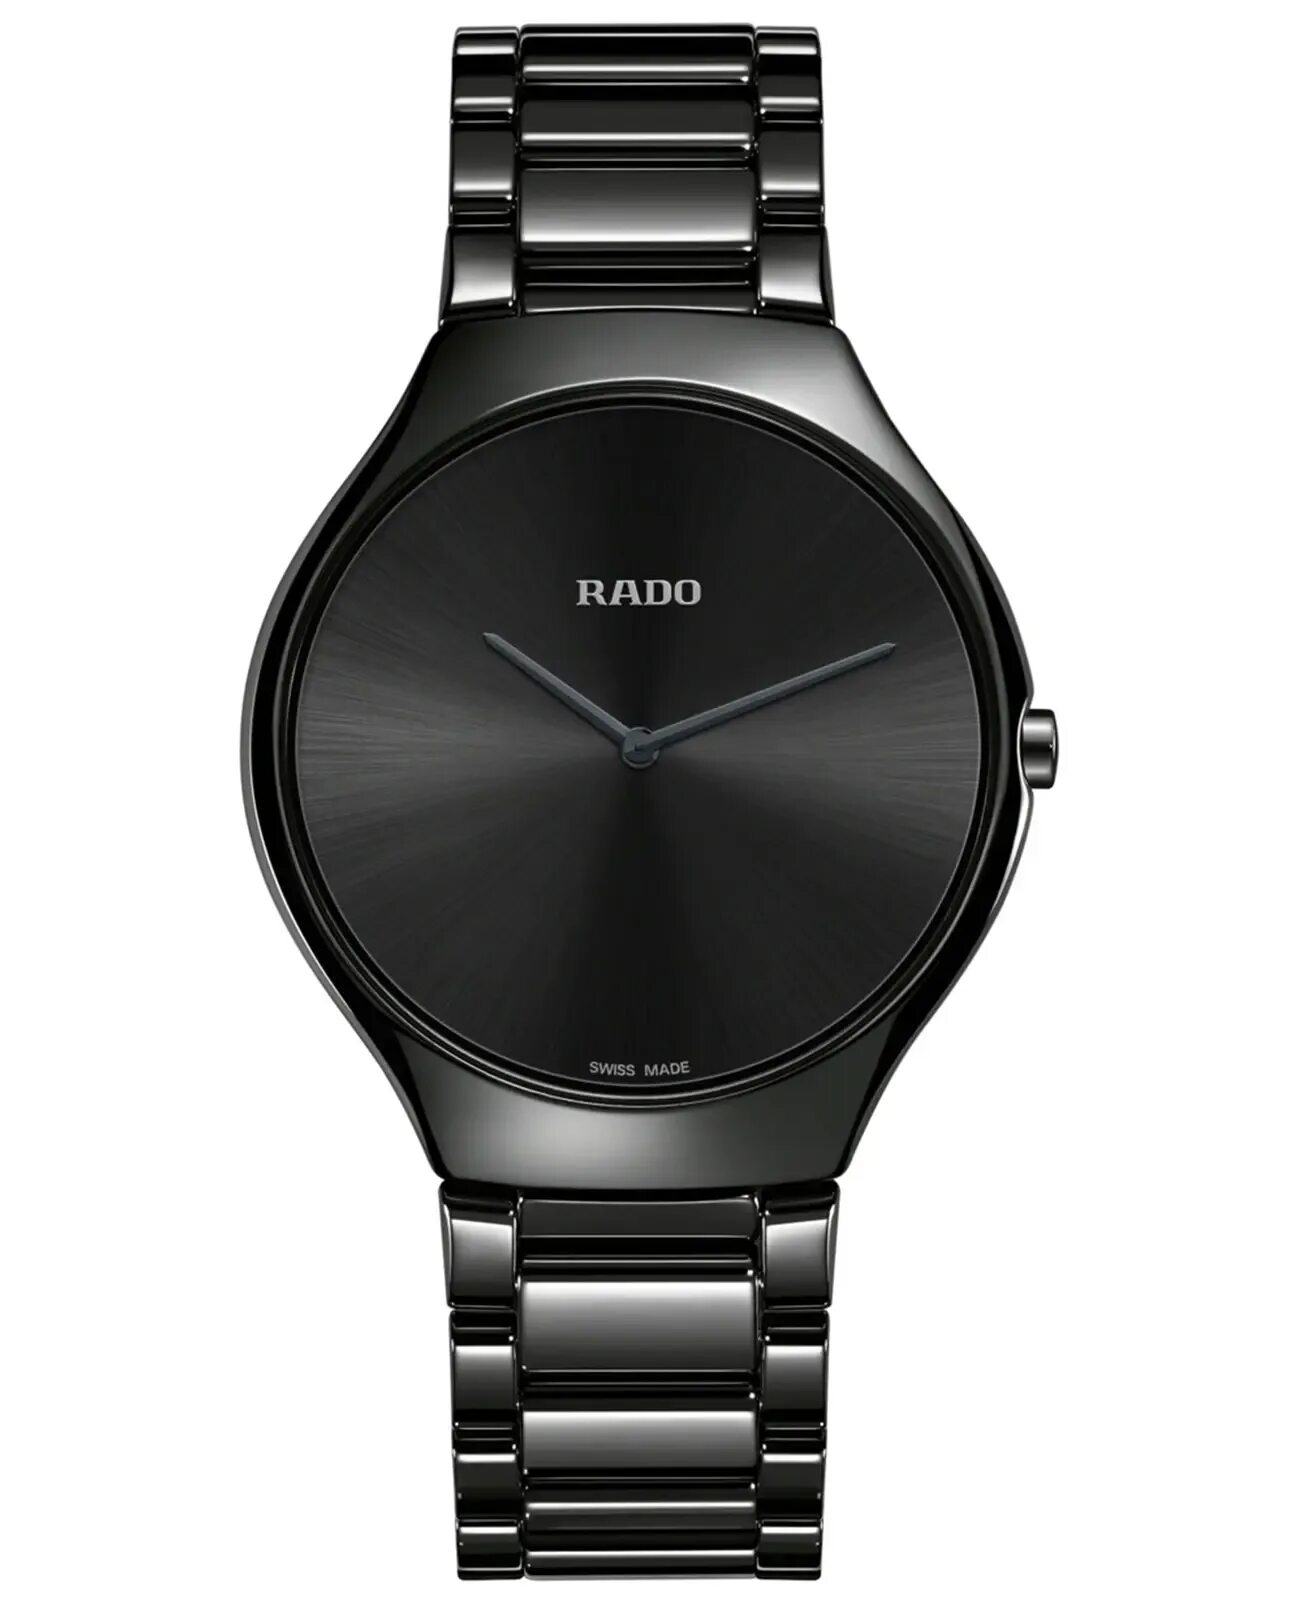 Купить мужские часы радо. Rado 420.0742.3.073. Rado часы true Thinline. Часы Rado true Thinline Swiss. Rado. 01.420.0742.3.115.